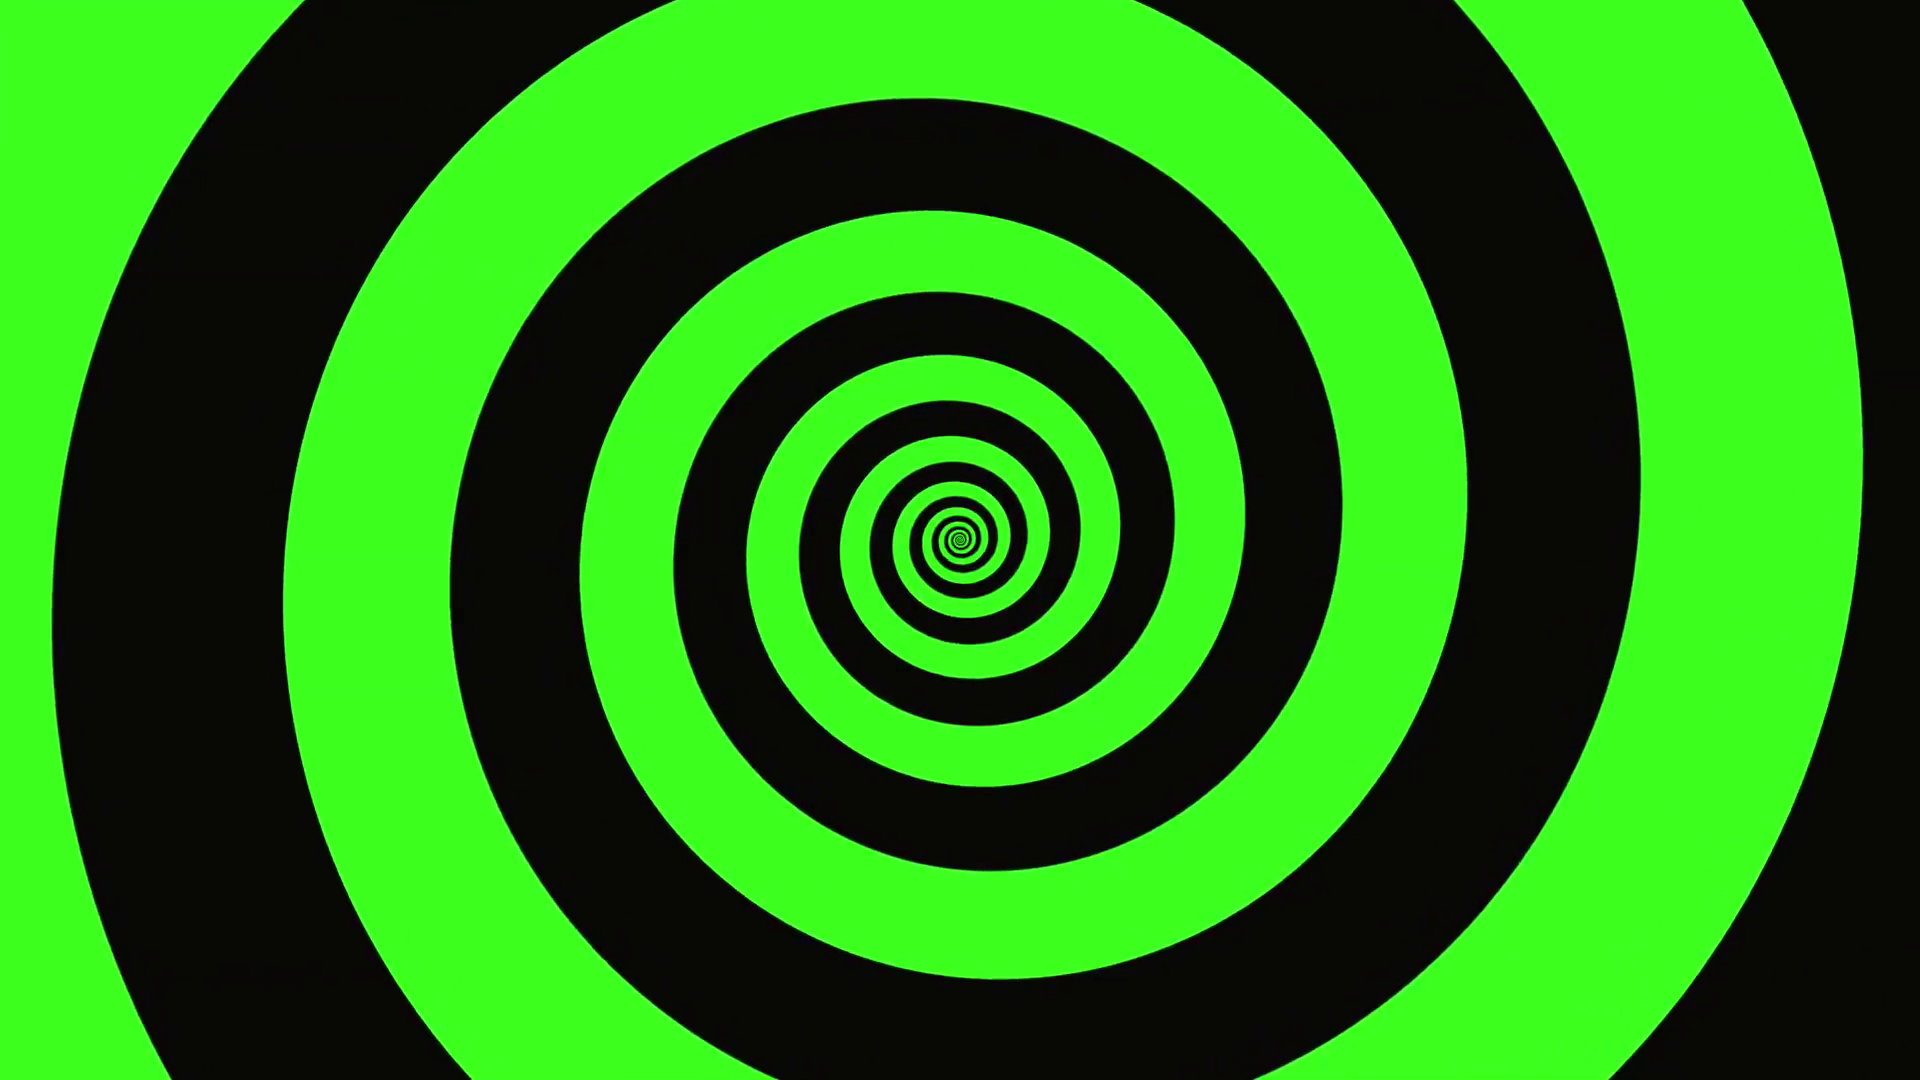 Green & Black spiral Optical illusion illustration, abstract ...